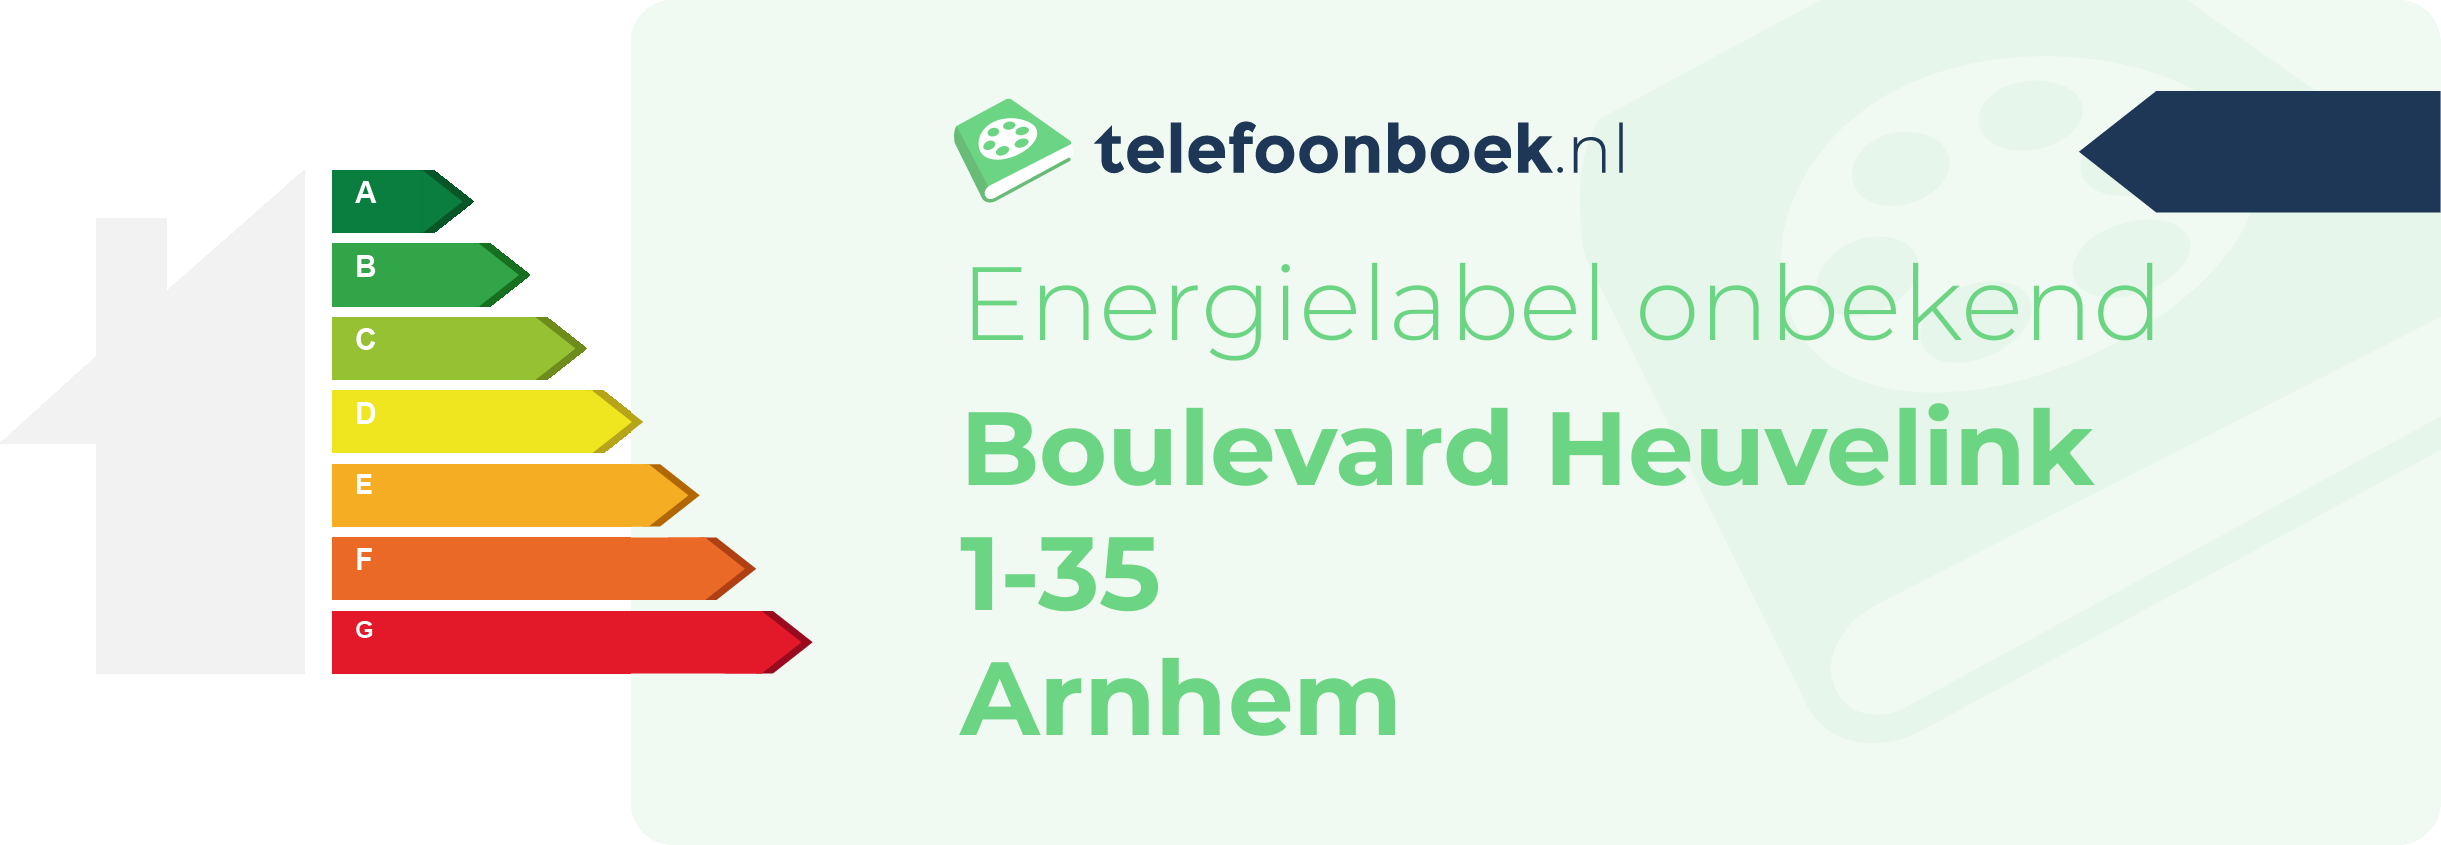 Energielabel Boulevard Heuvelink 1-35 Arnhem